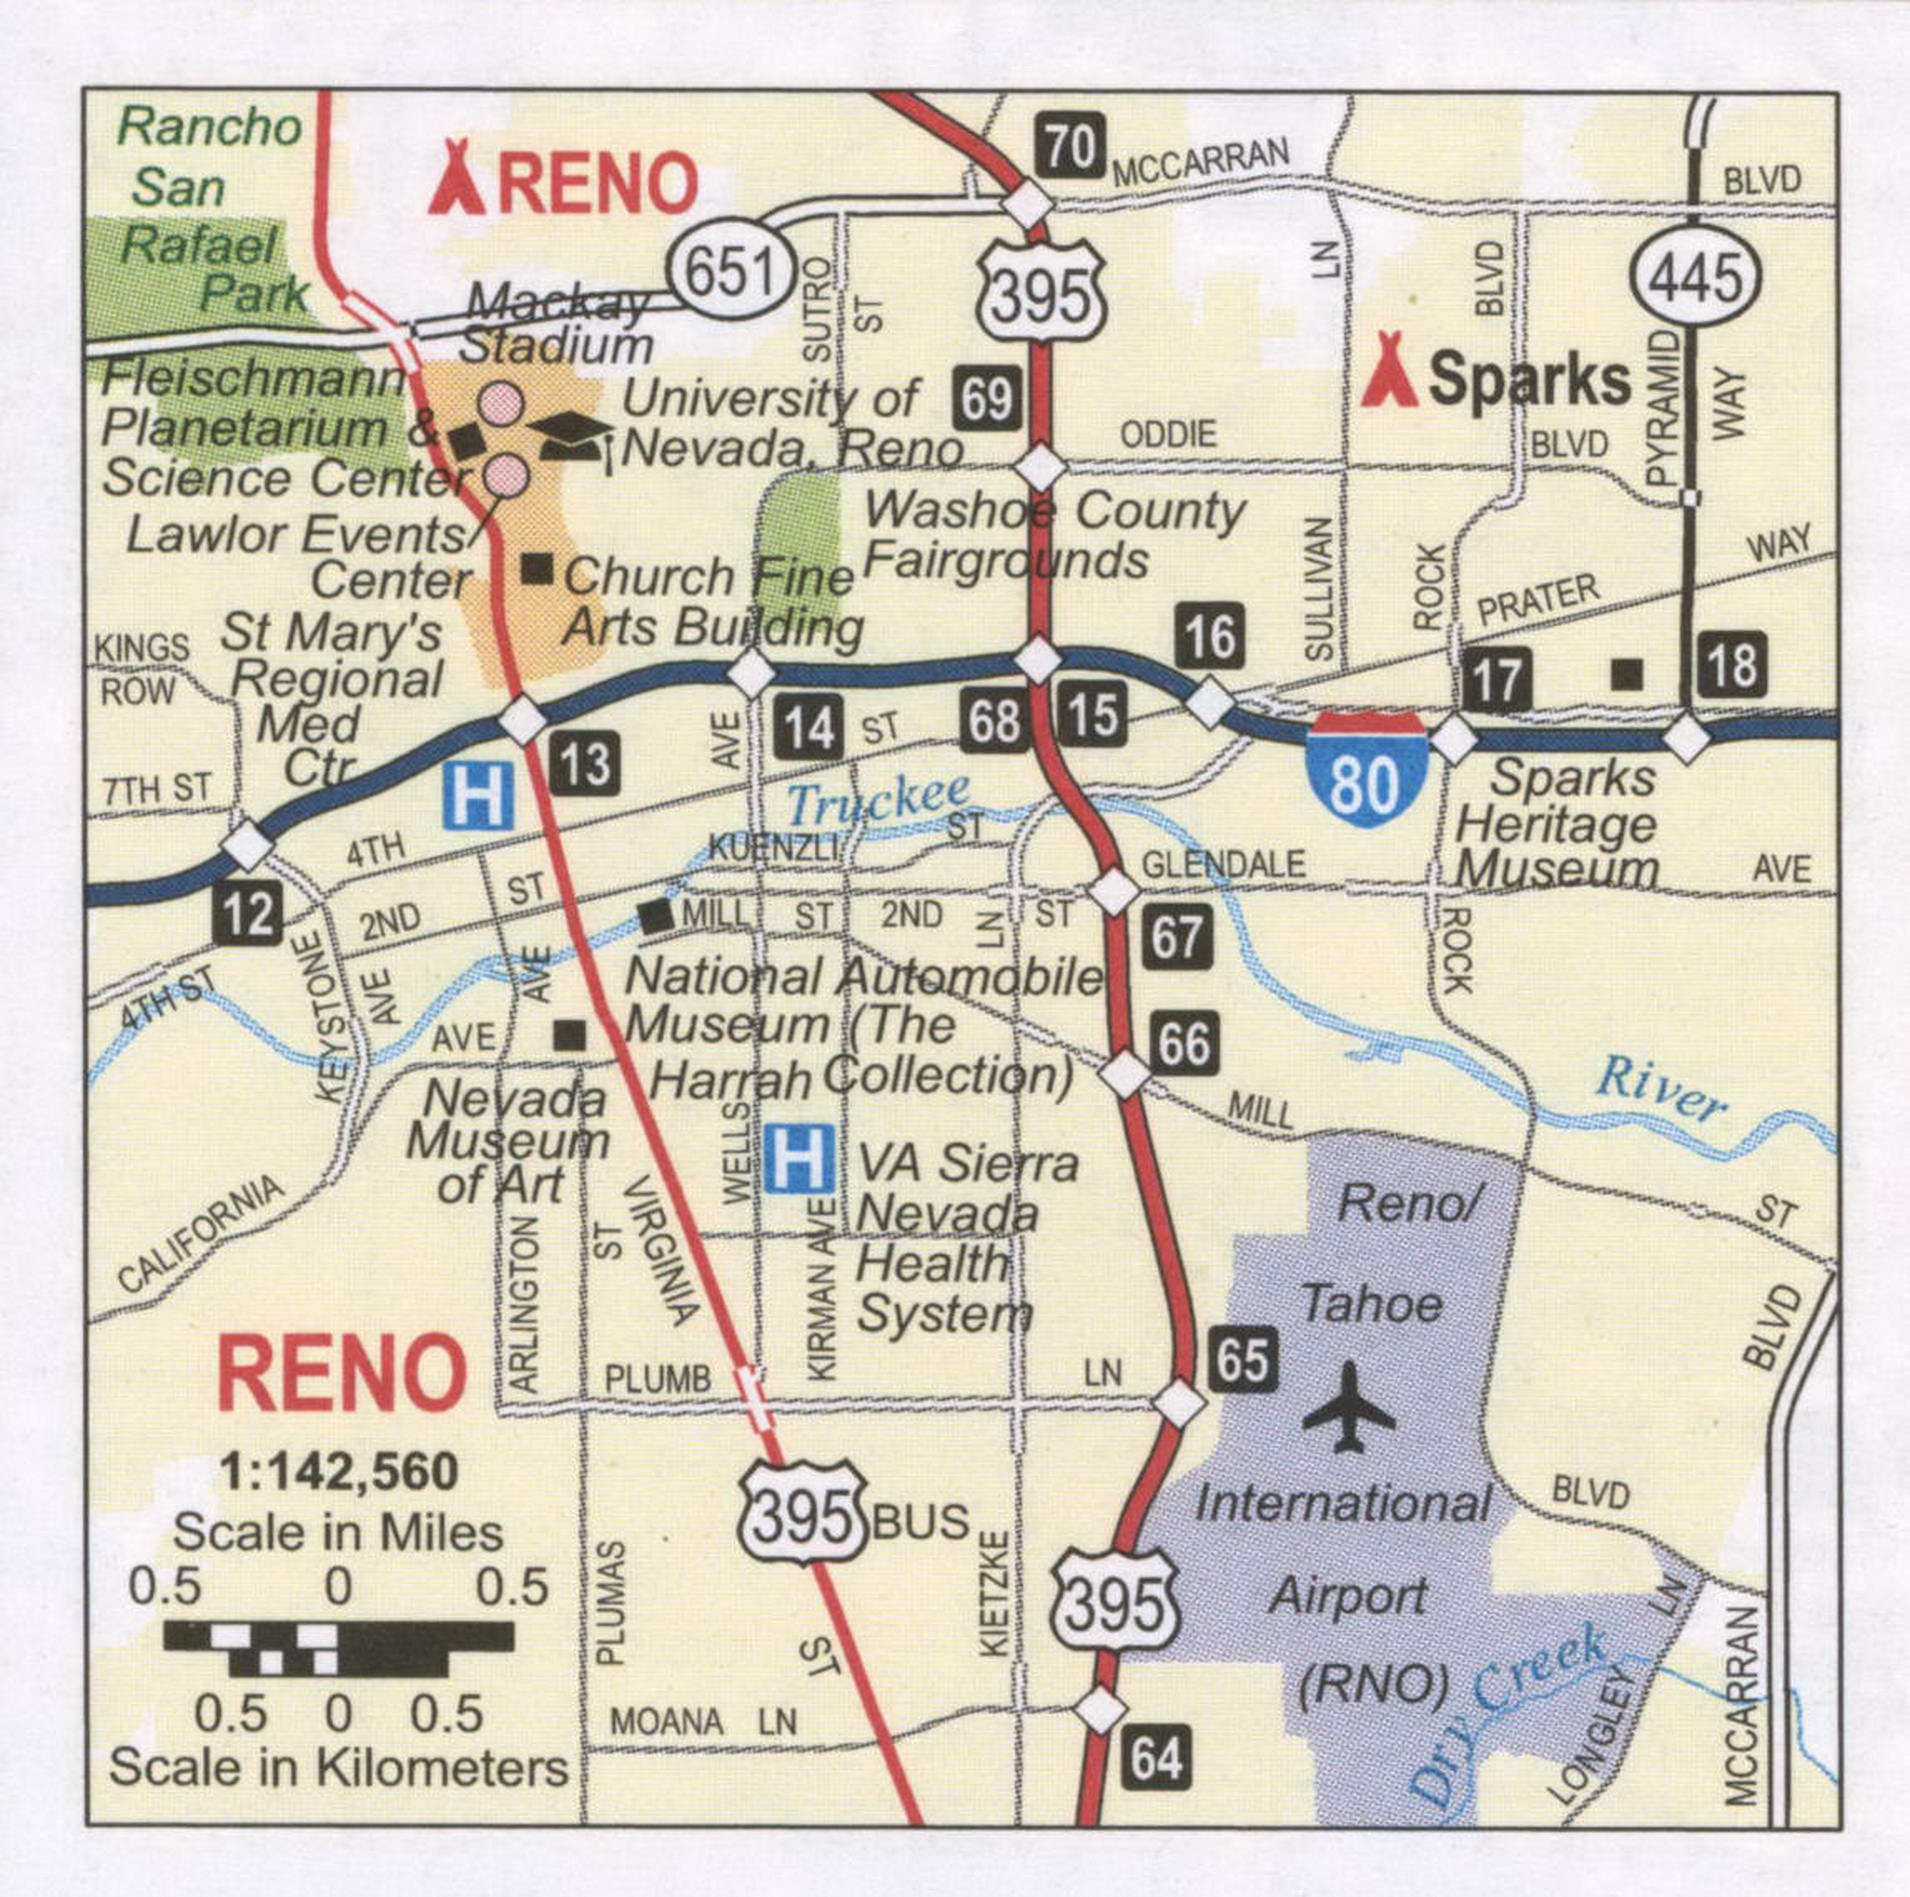 Reno road map